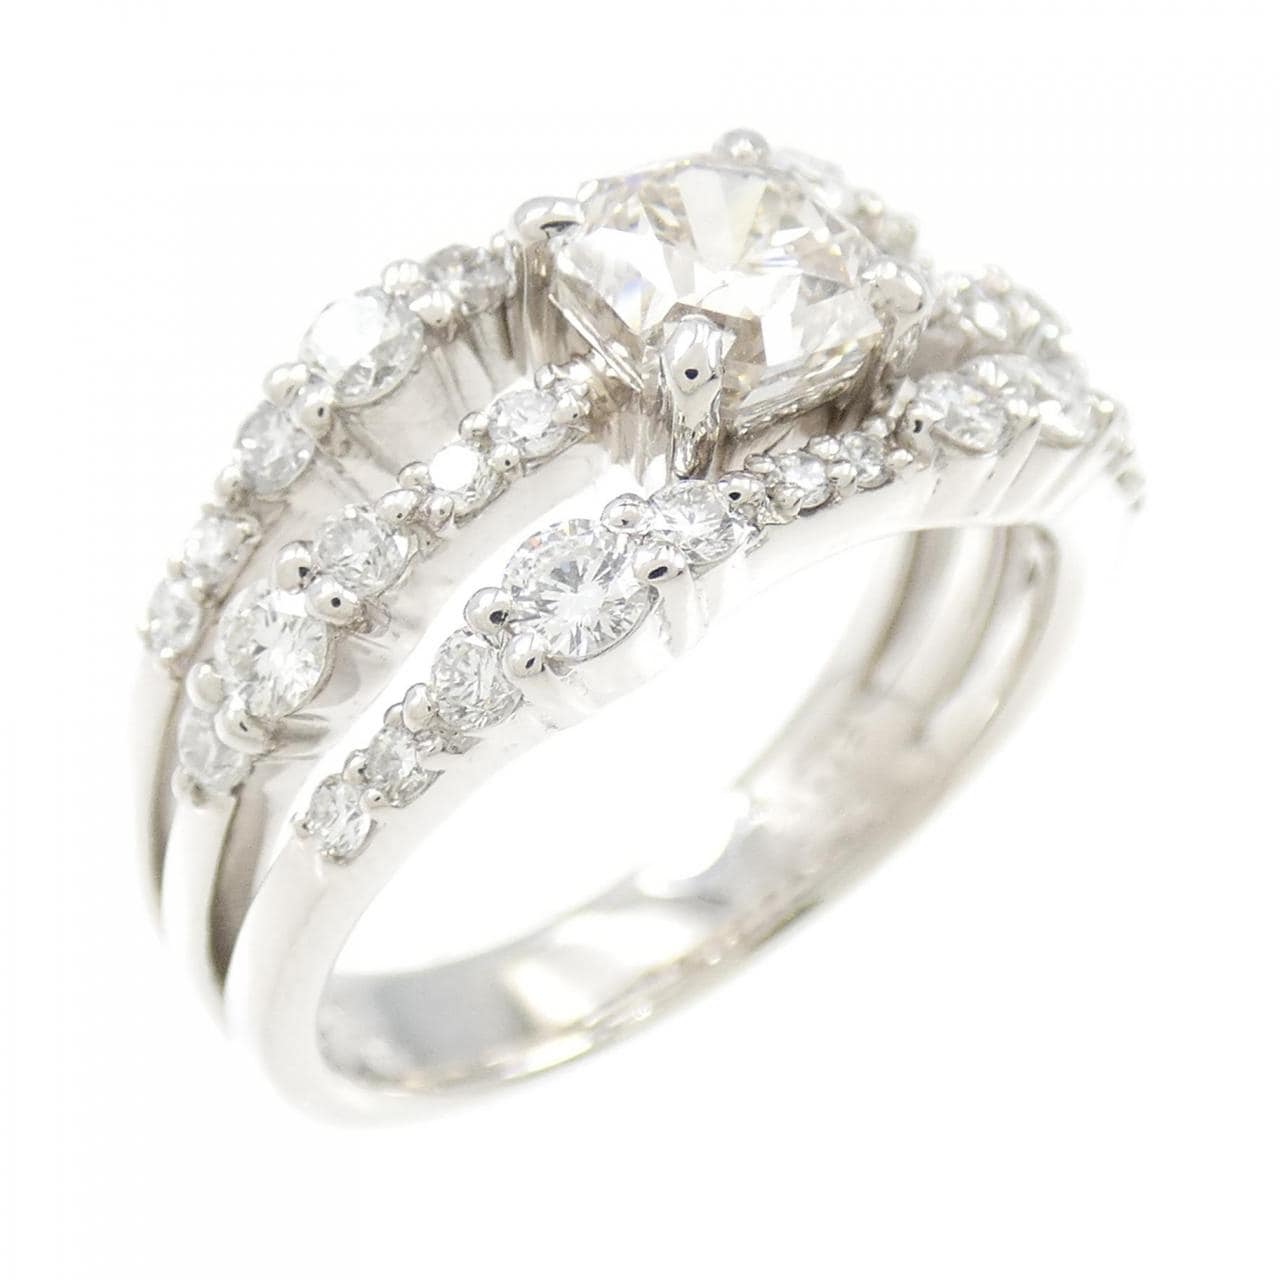 PT Diamond Ring 1.008CT FaB SI2 Fancy Cut